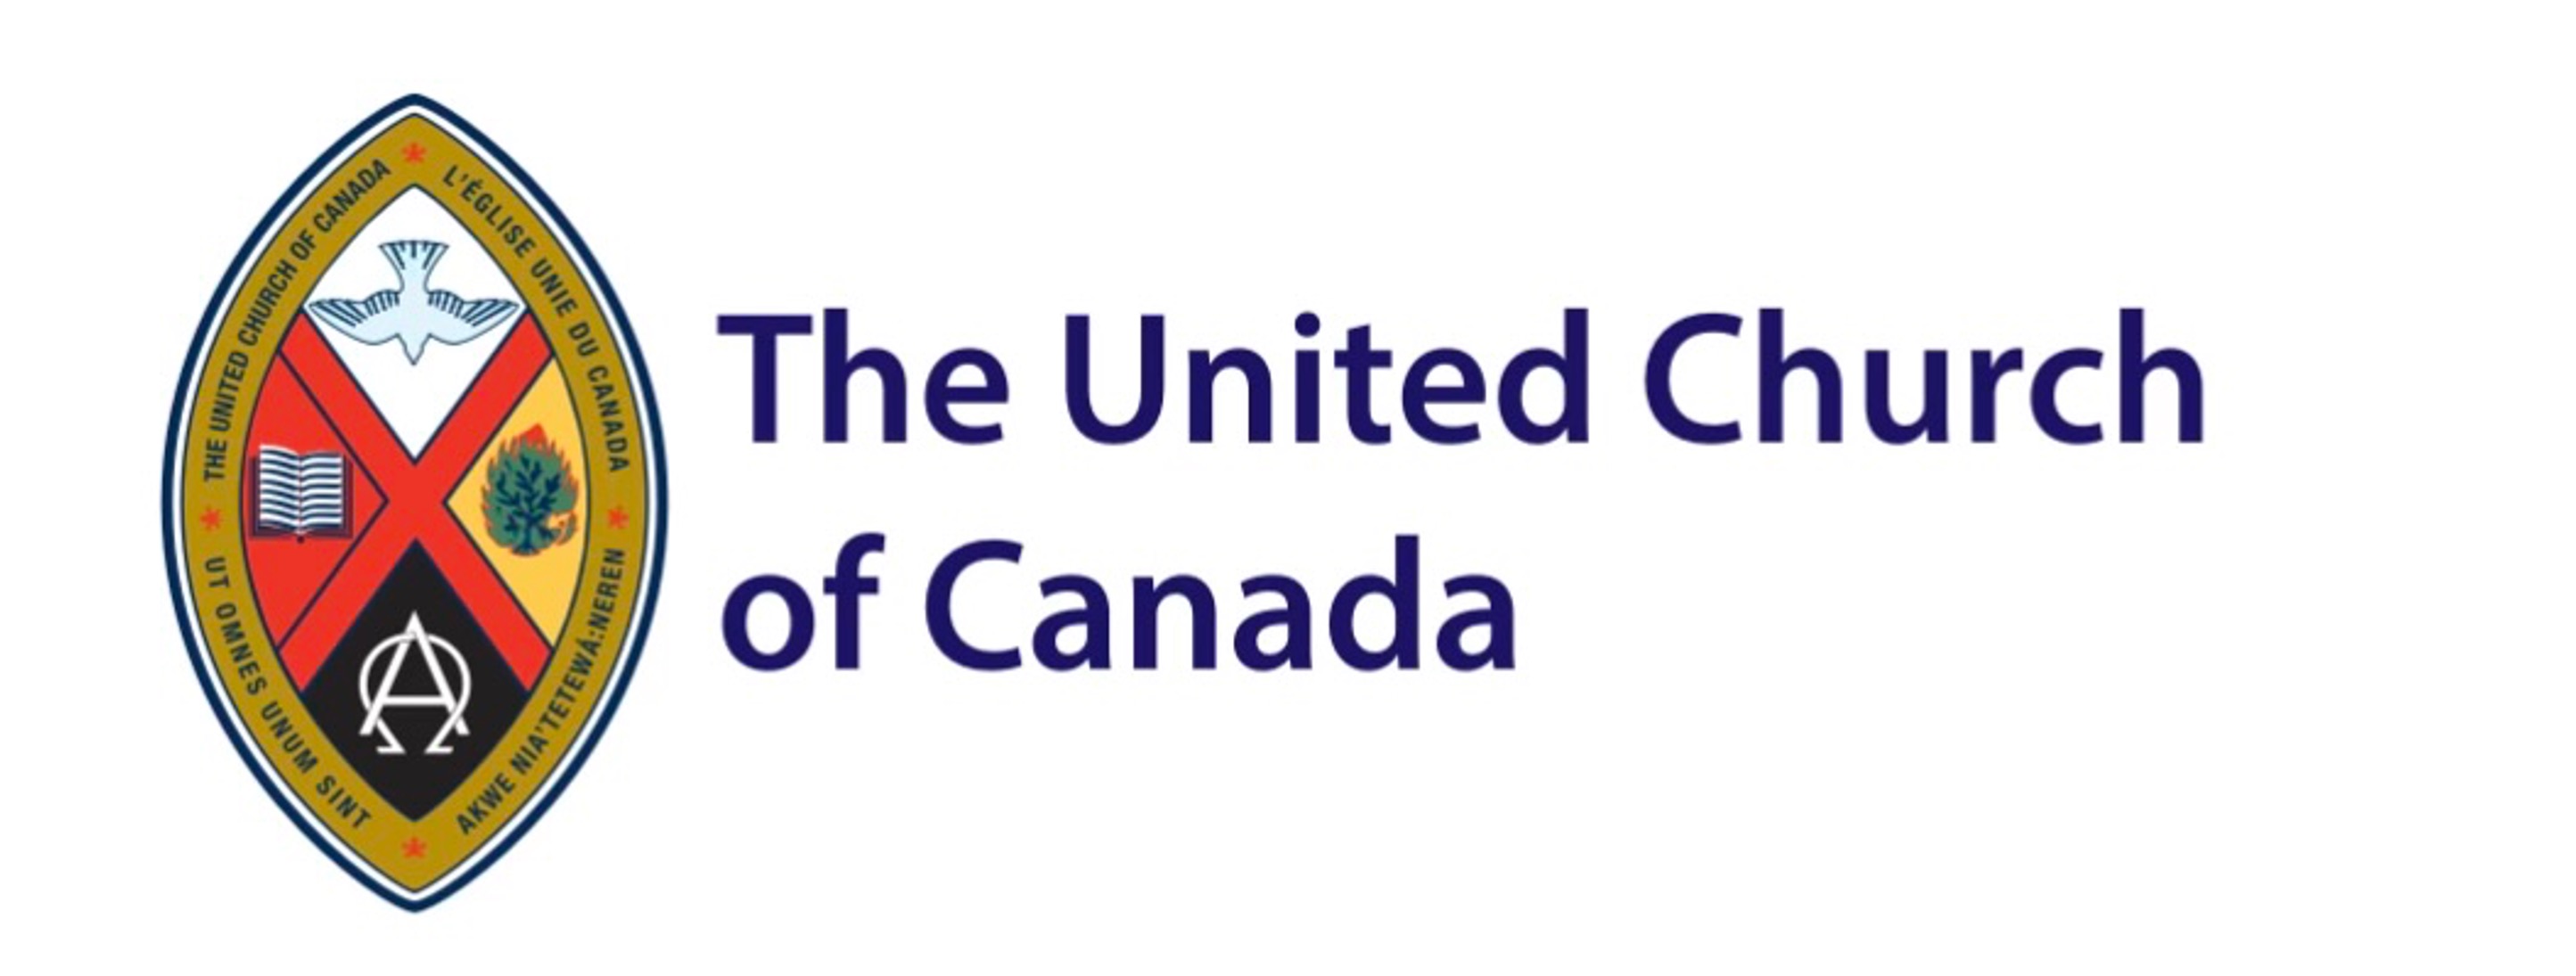 THE UNITED CHURCH OF CANADA